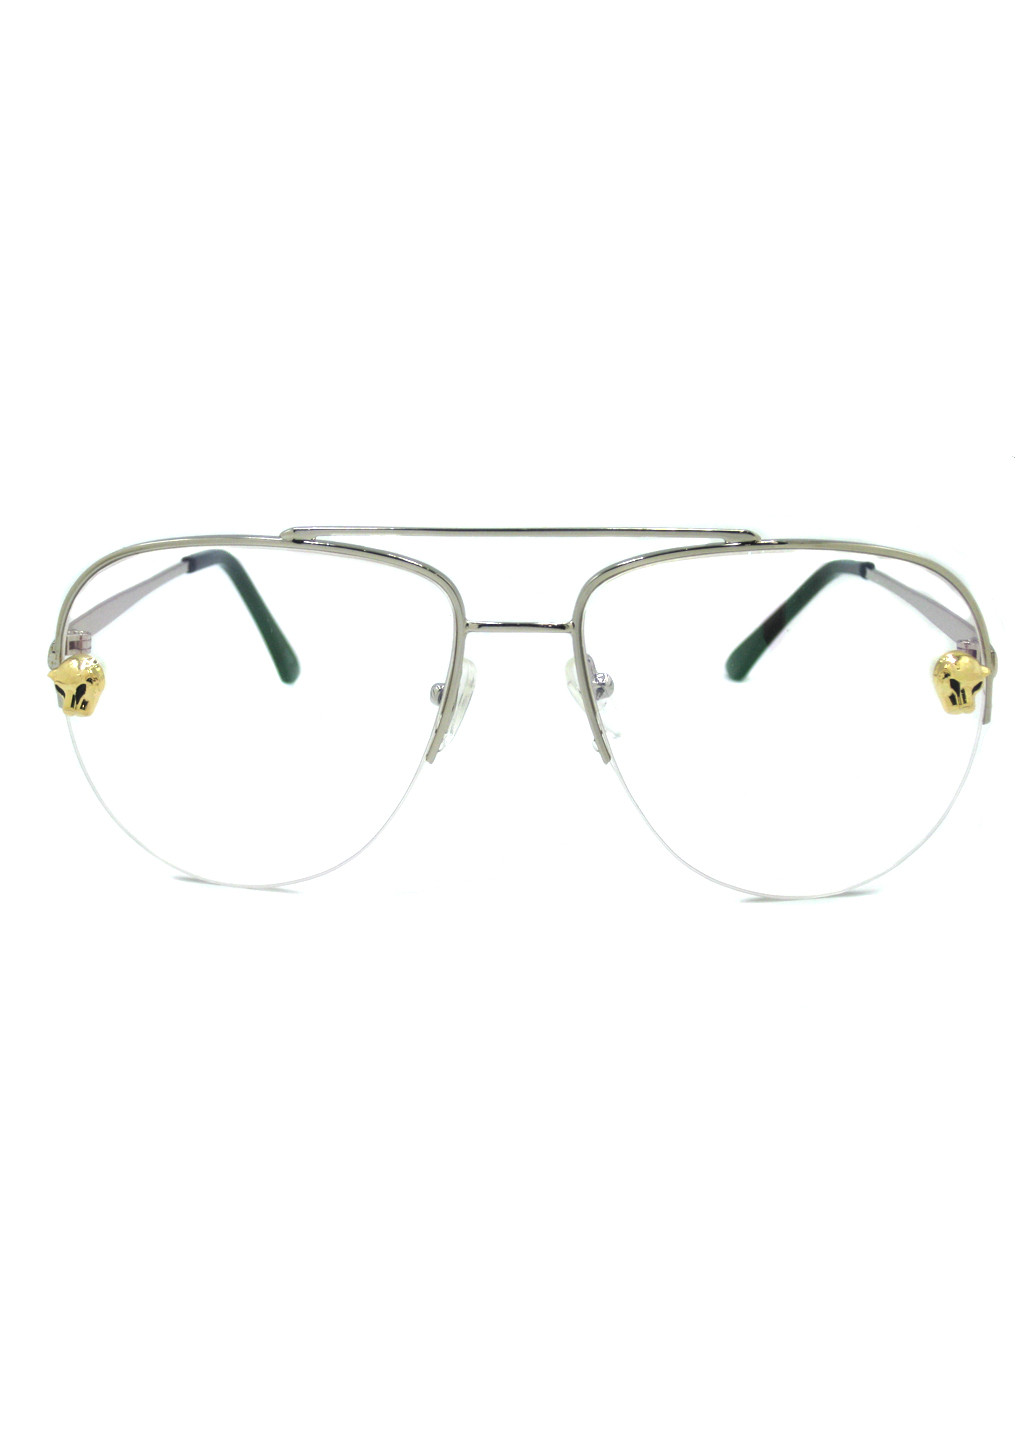 Имидживые очки Imagstyle 3447 5і (265090102)